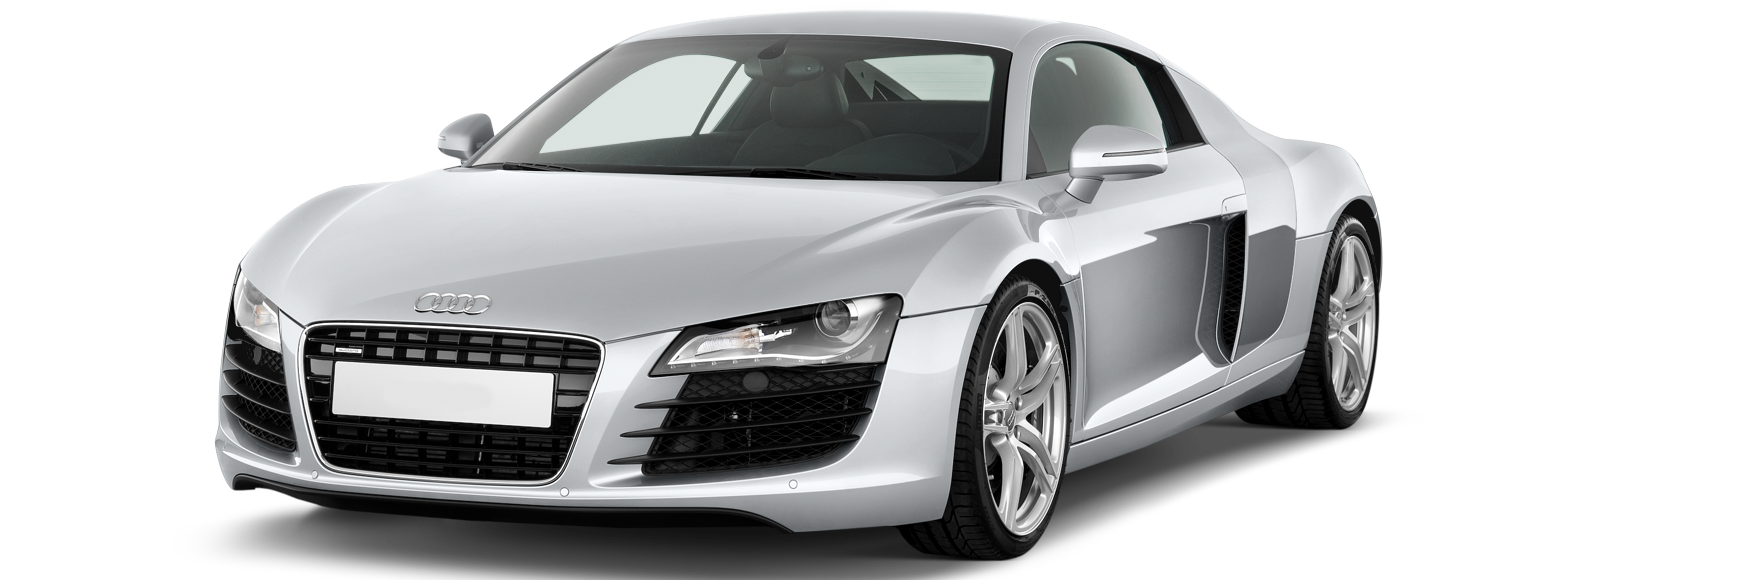 Download PNG image - White Audi PNG Image 